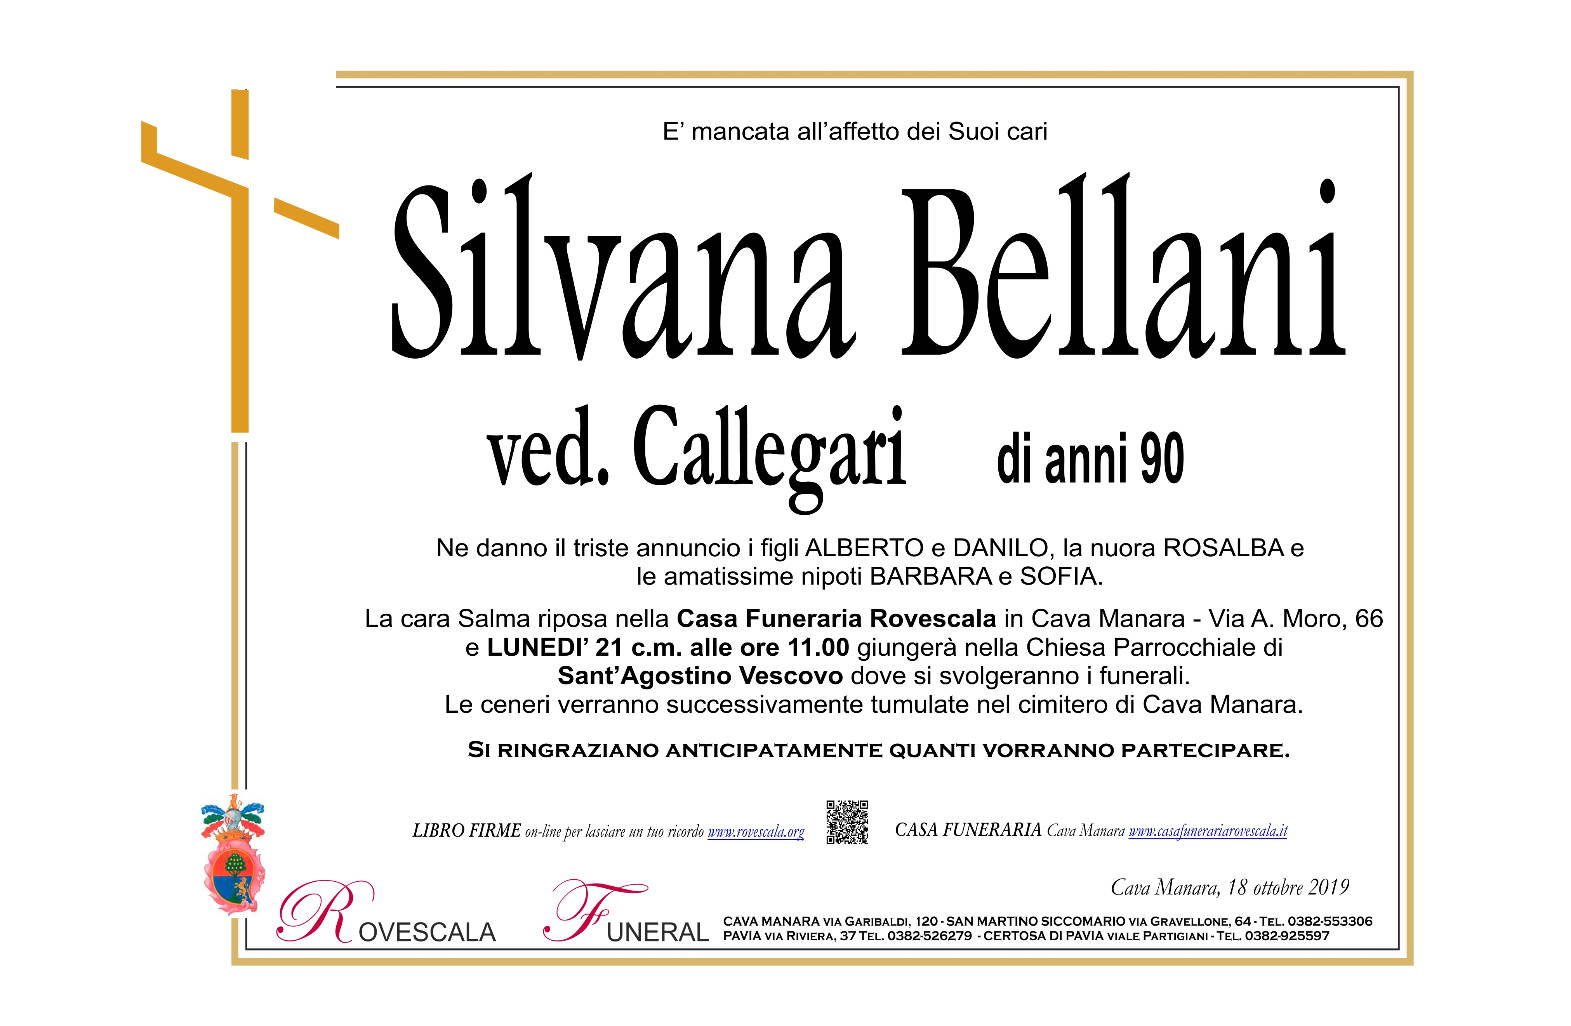 Silvana Bellani